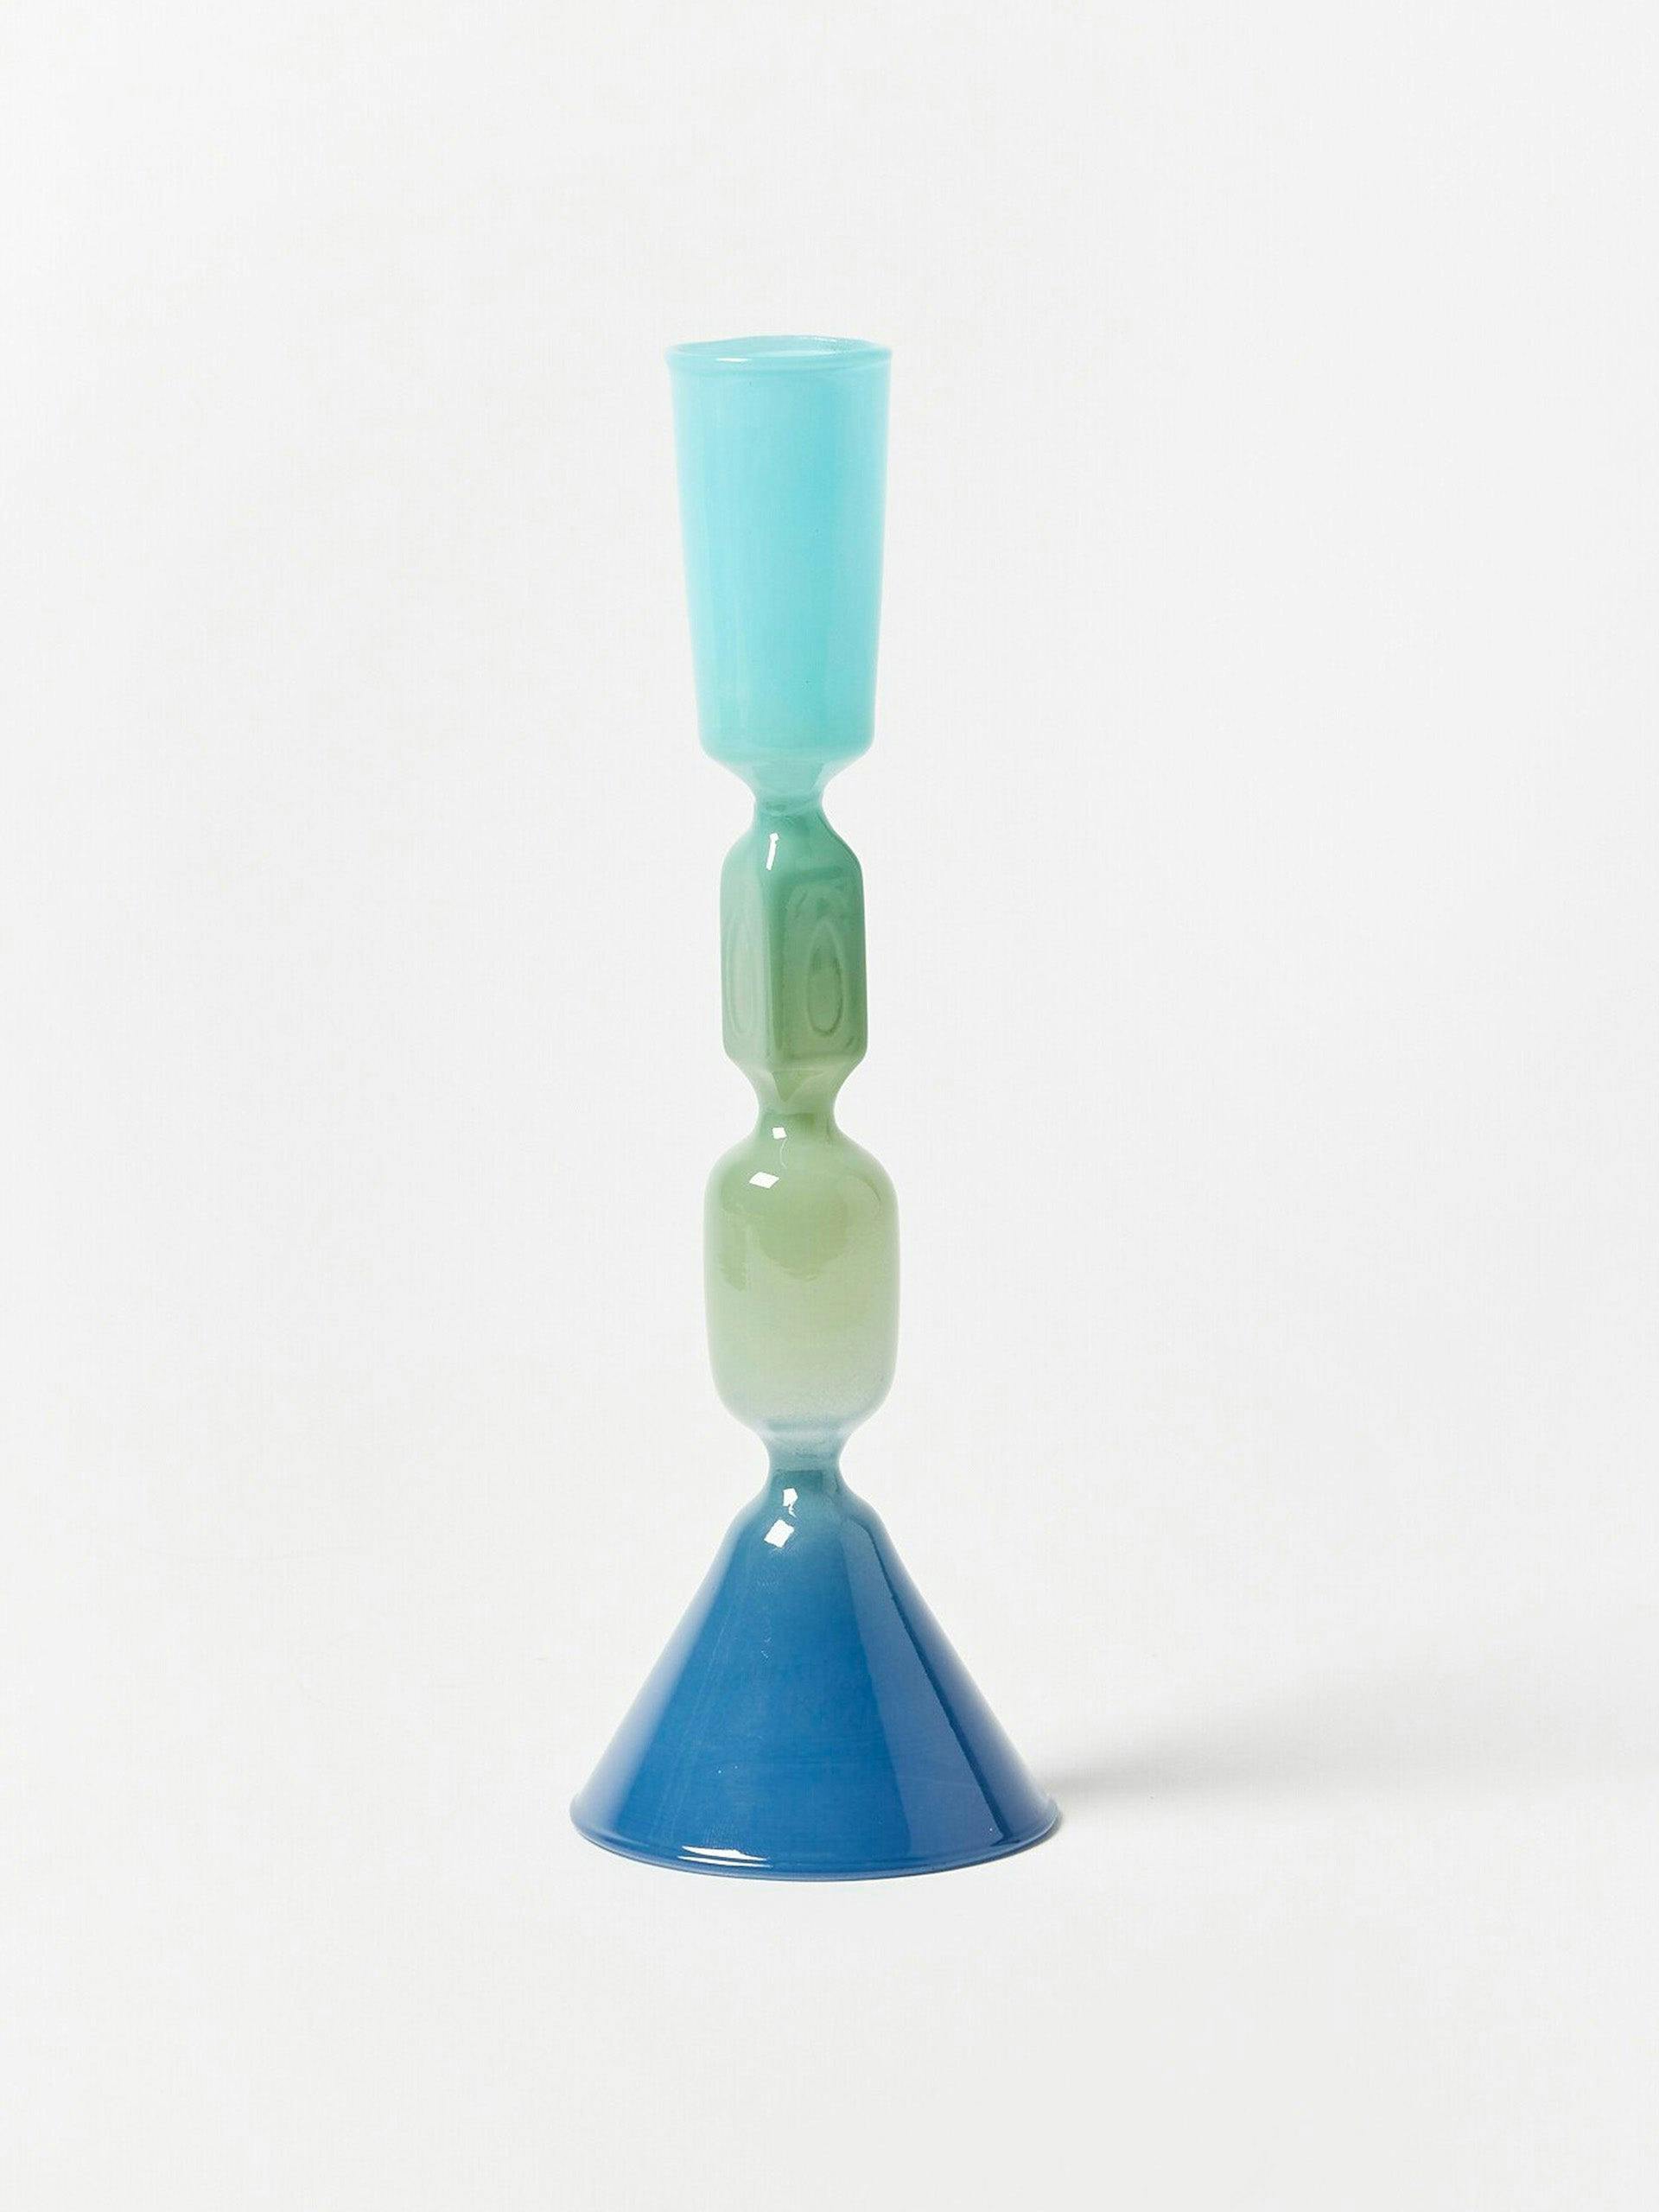 Solis ombre blue glass candleholder